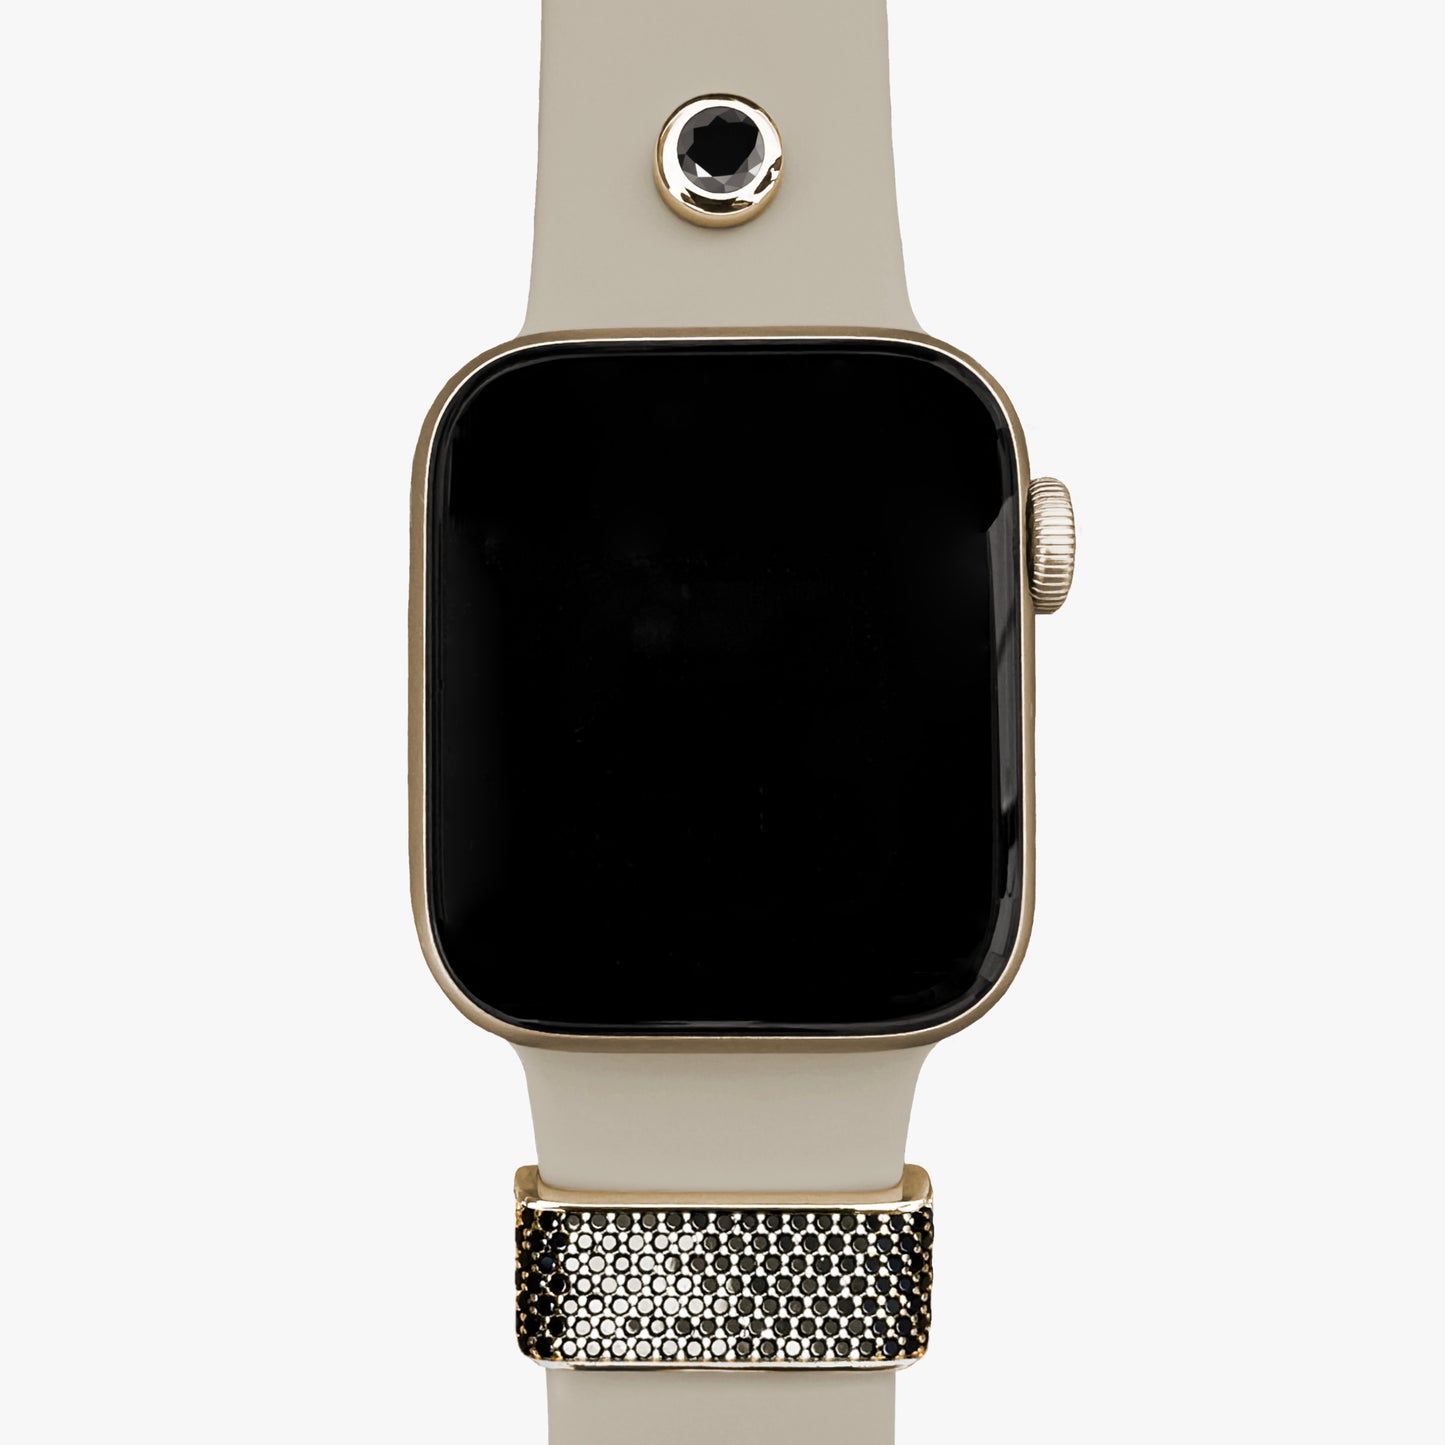 NEU! Set - Loop Stardust Large + Pin Moviestar & Armband für Apple Watch - 24k Gold plattiert - creme